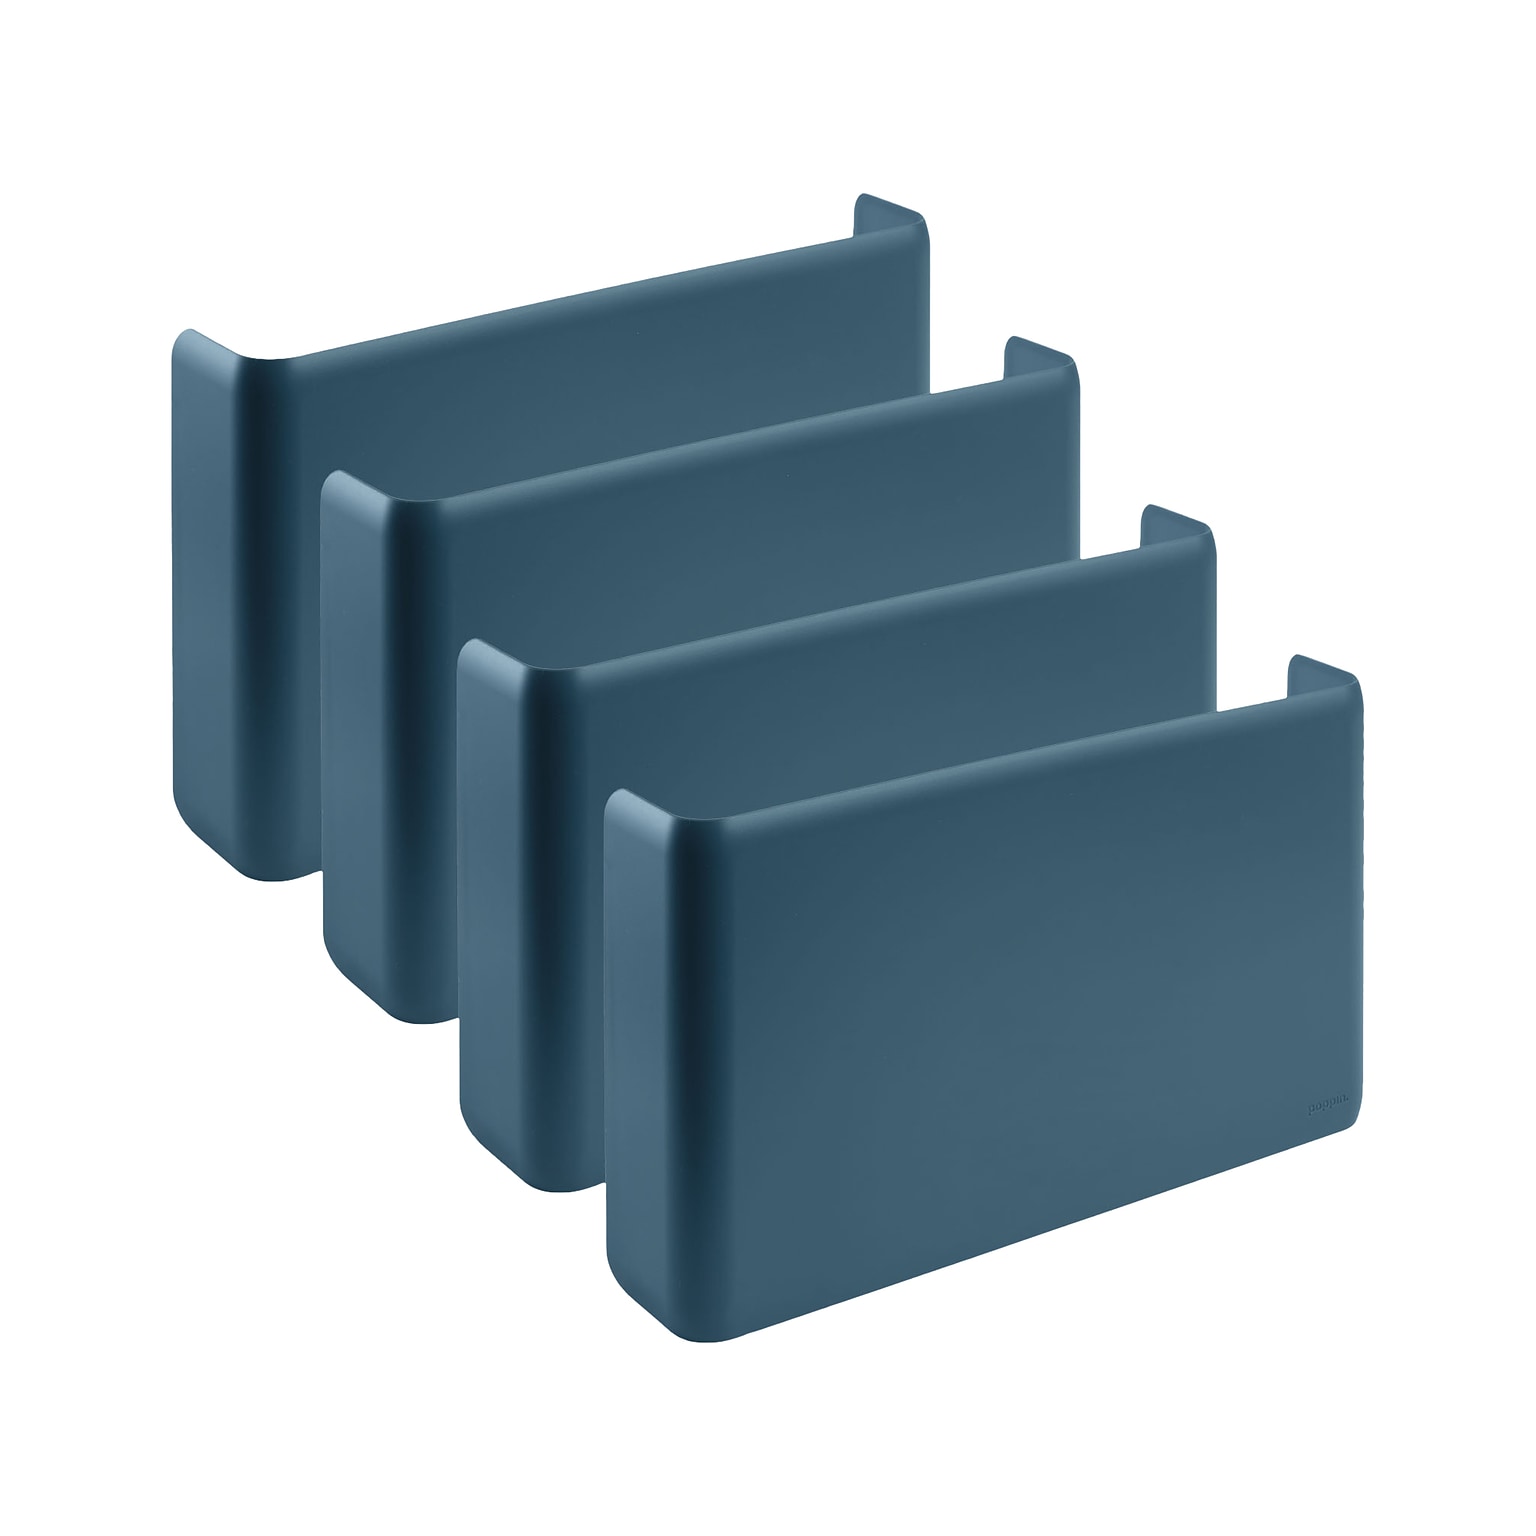 Poppin 1-Pocket Plastic Letter Size Wall File, Slate Blue, 4/Pack (108515)